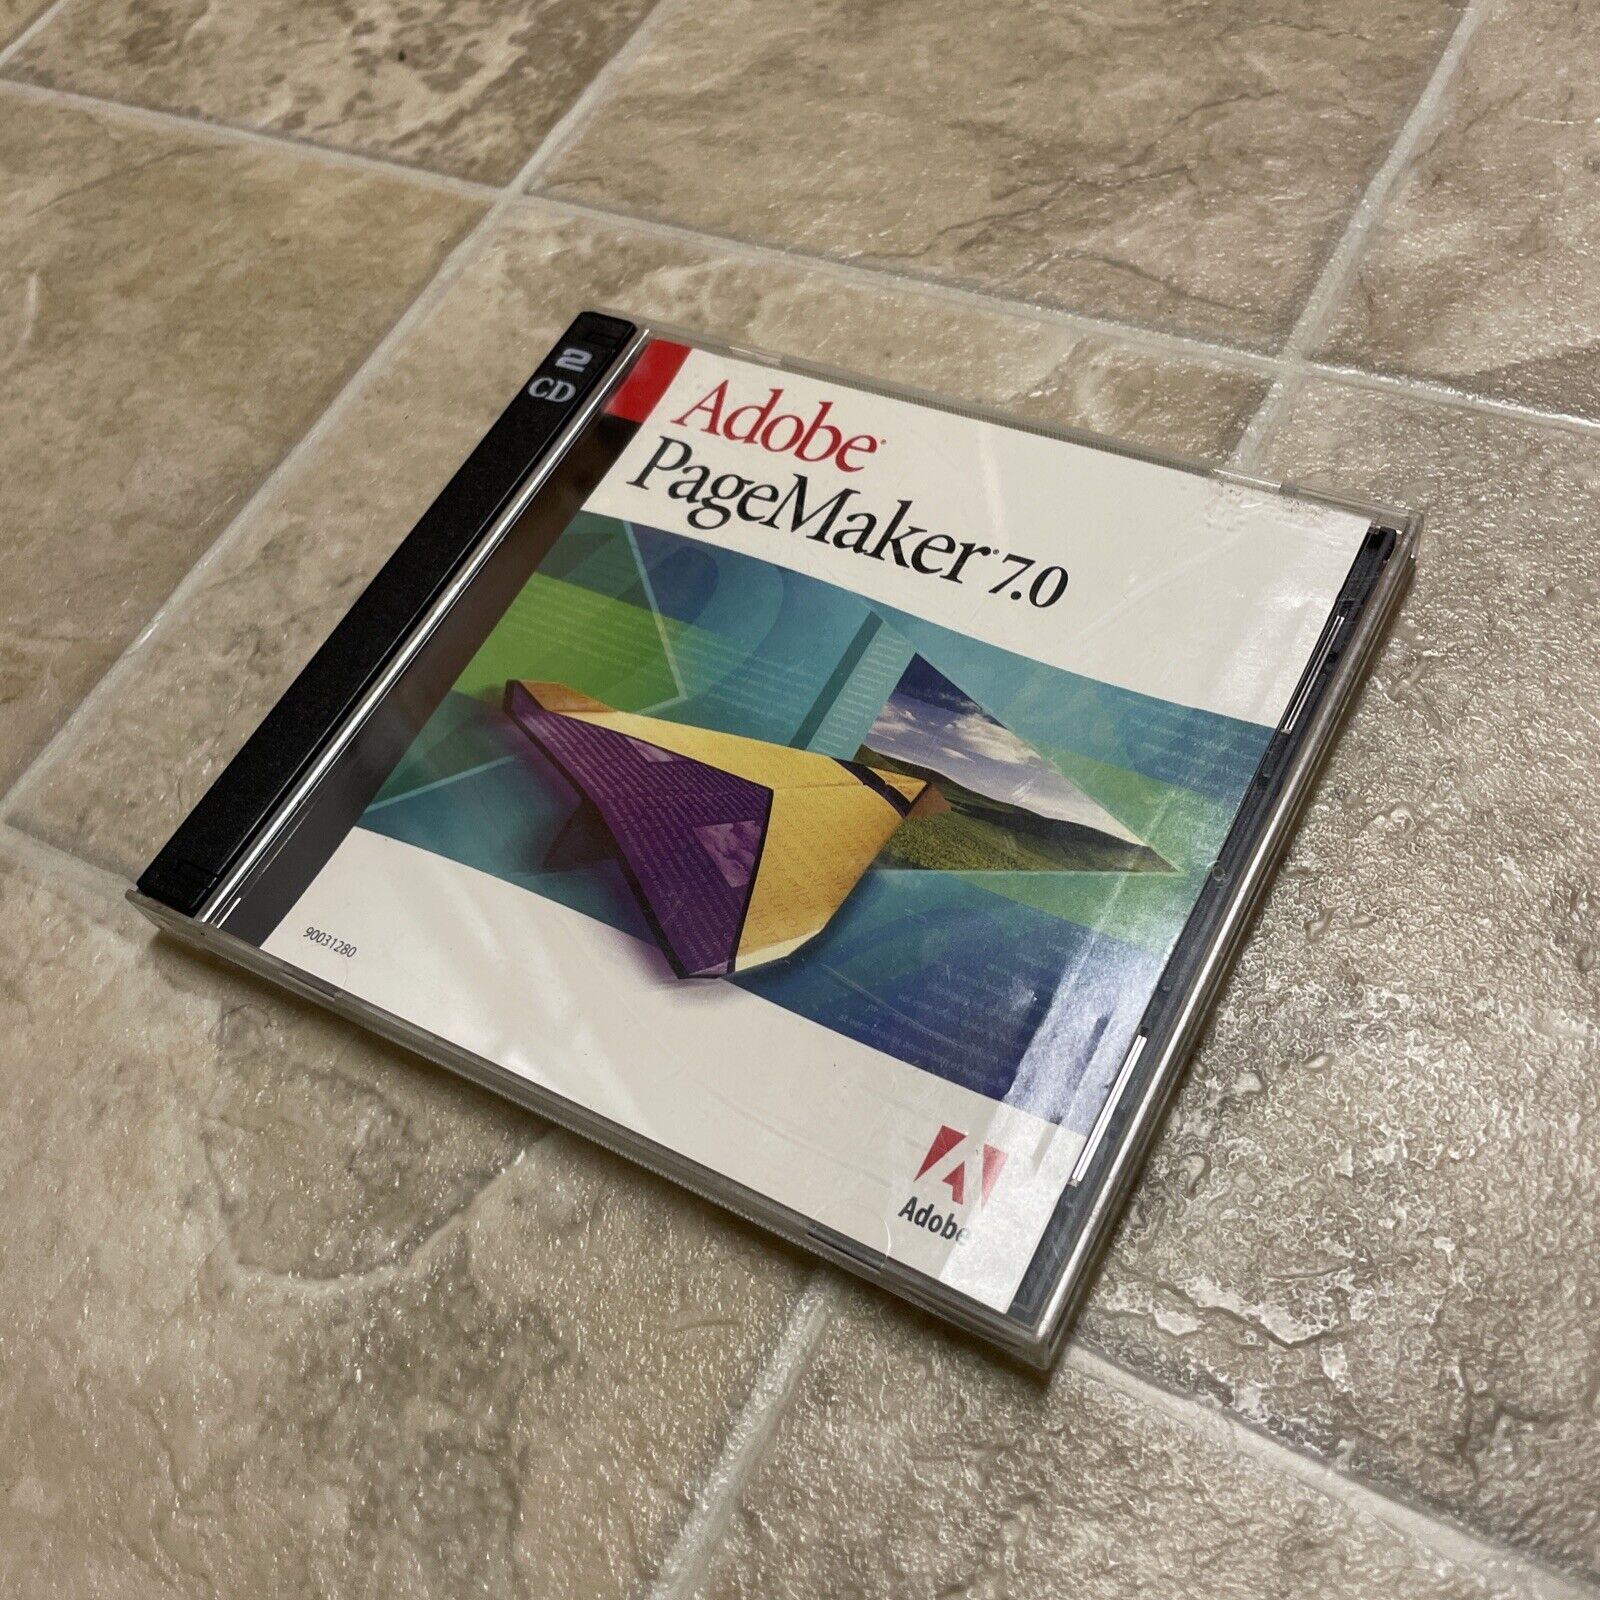 Adobe PageMaker 7.0 for Windows Full Retail Version Rare